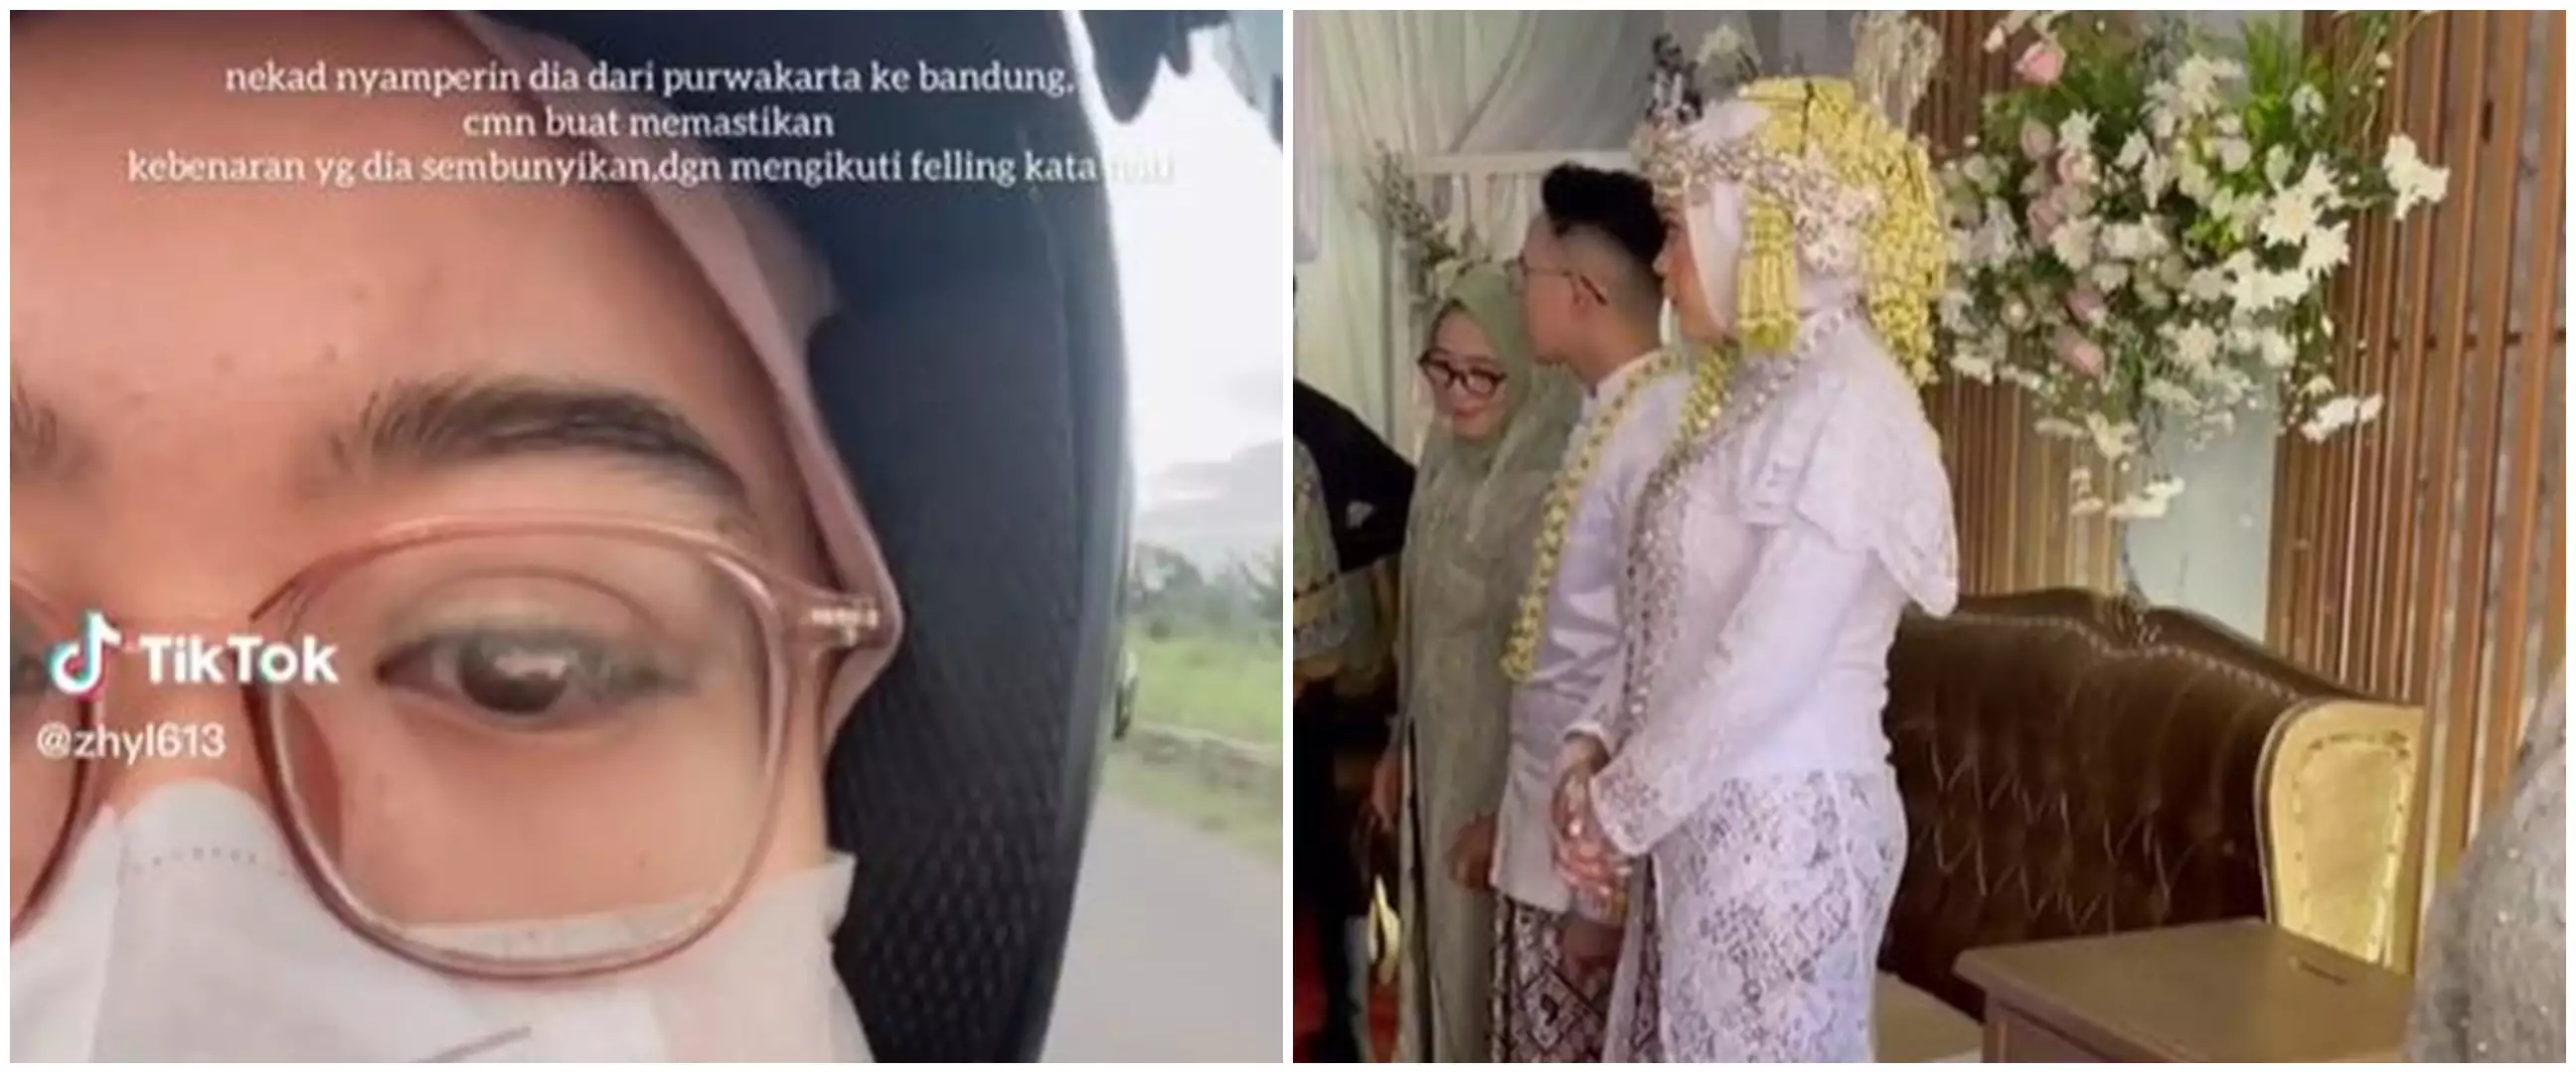 Kisah pilu wanita pergoki pacar nikah dengan orang lain, nekat naik motor dari Purwakarta ke Bandung